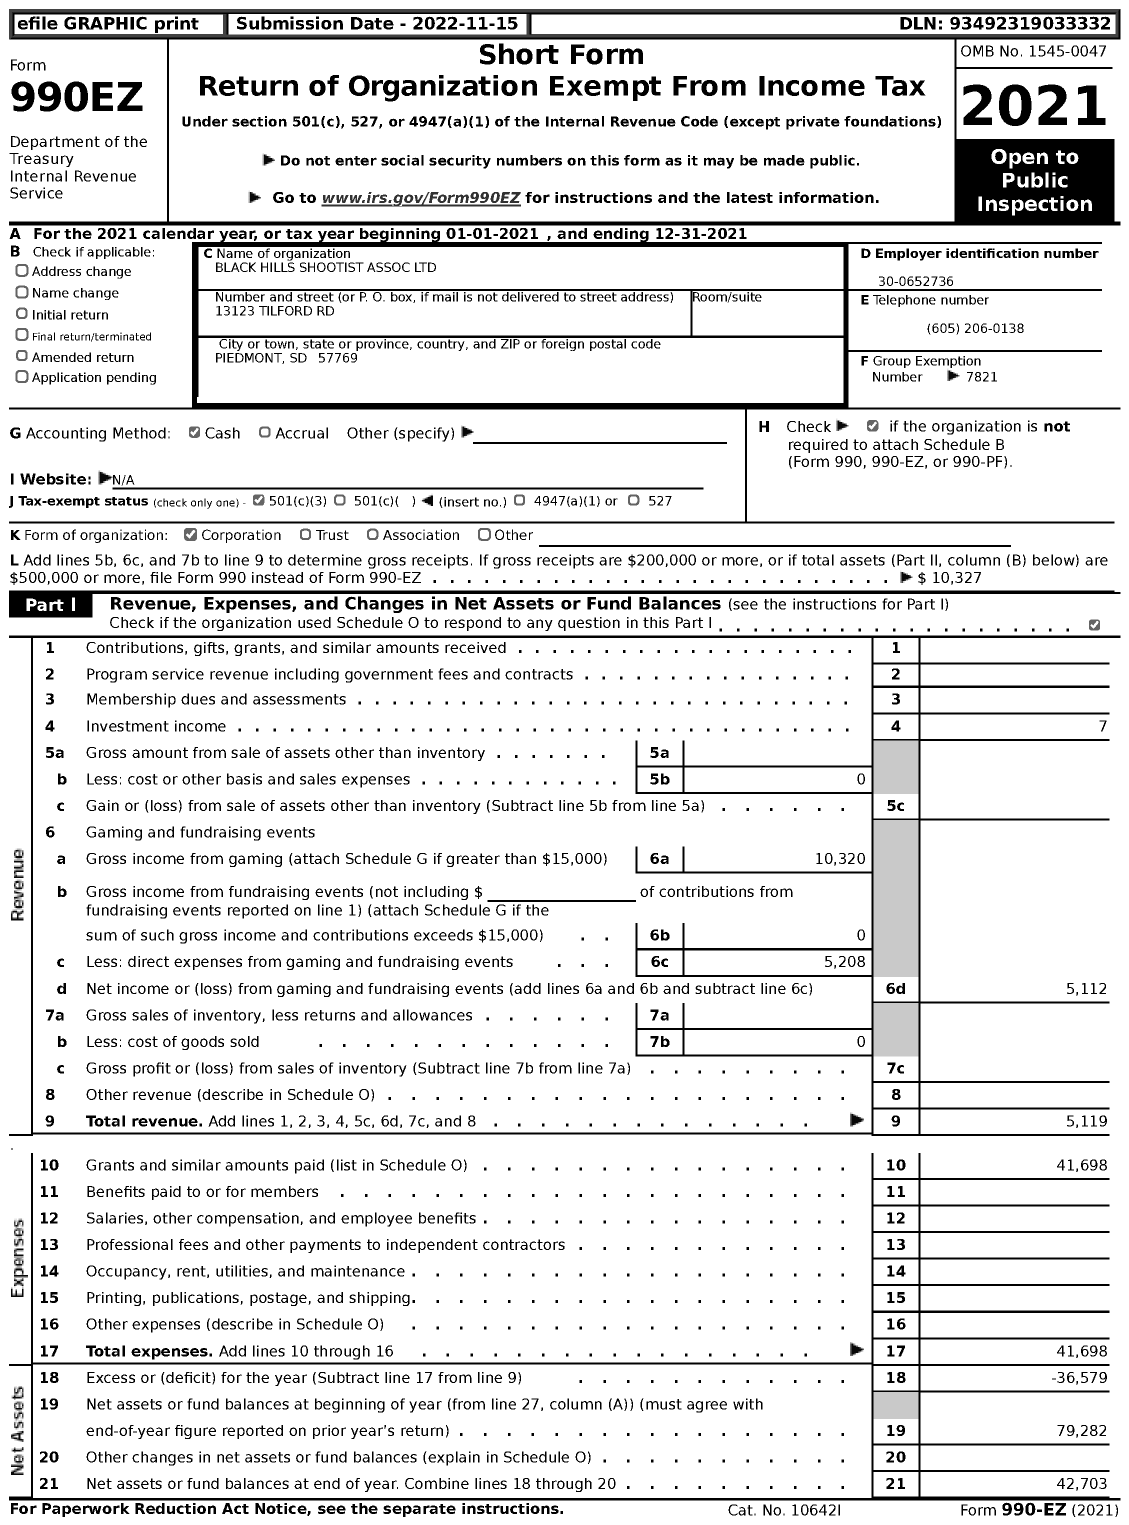 Image of first page of 2021 Form 990EZ for Black Hills Shootist Association